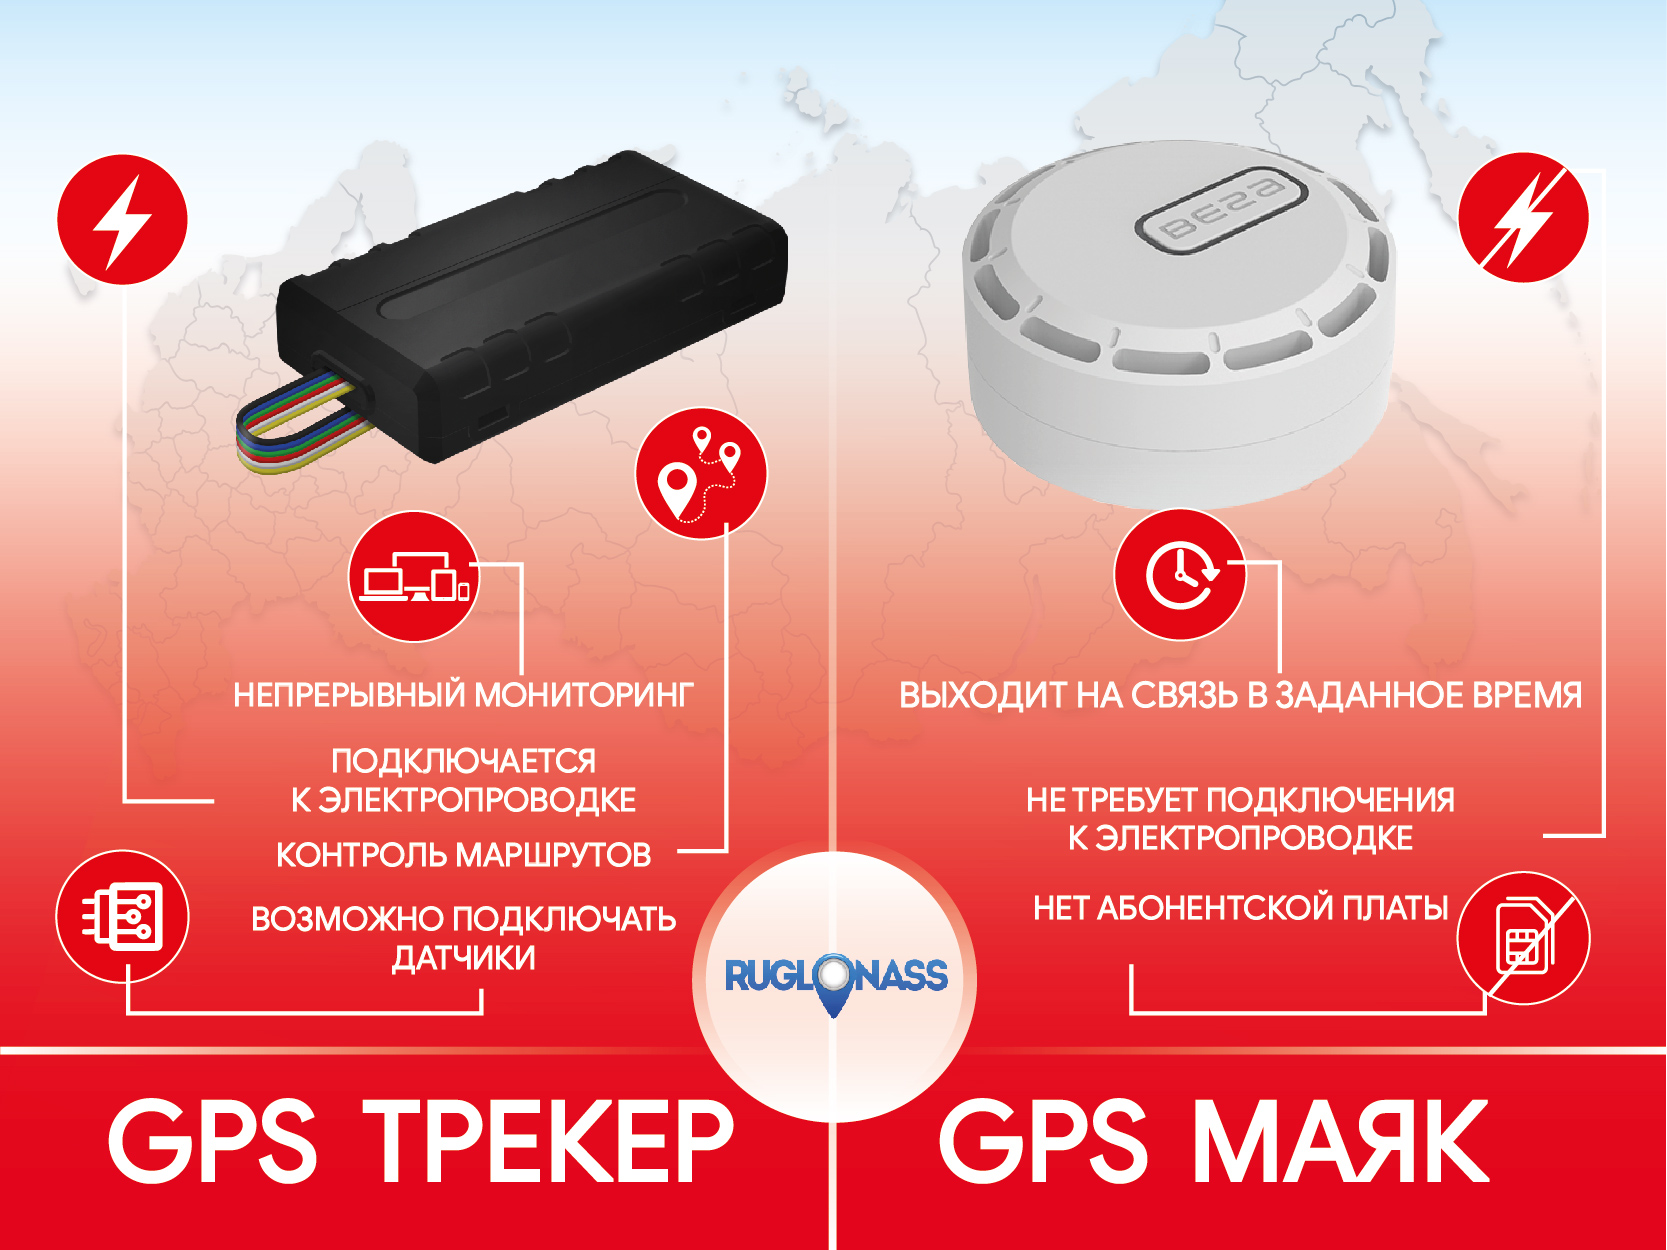 GPS трекер и GPS маяк для лизинга